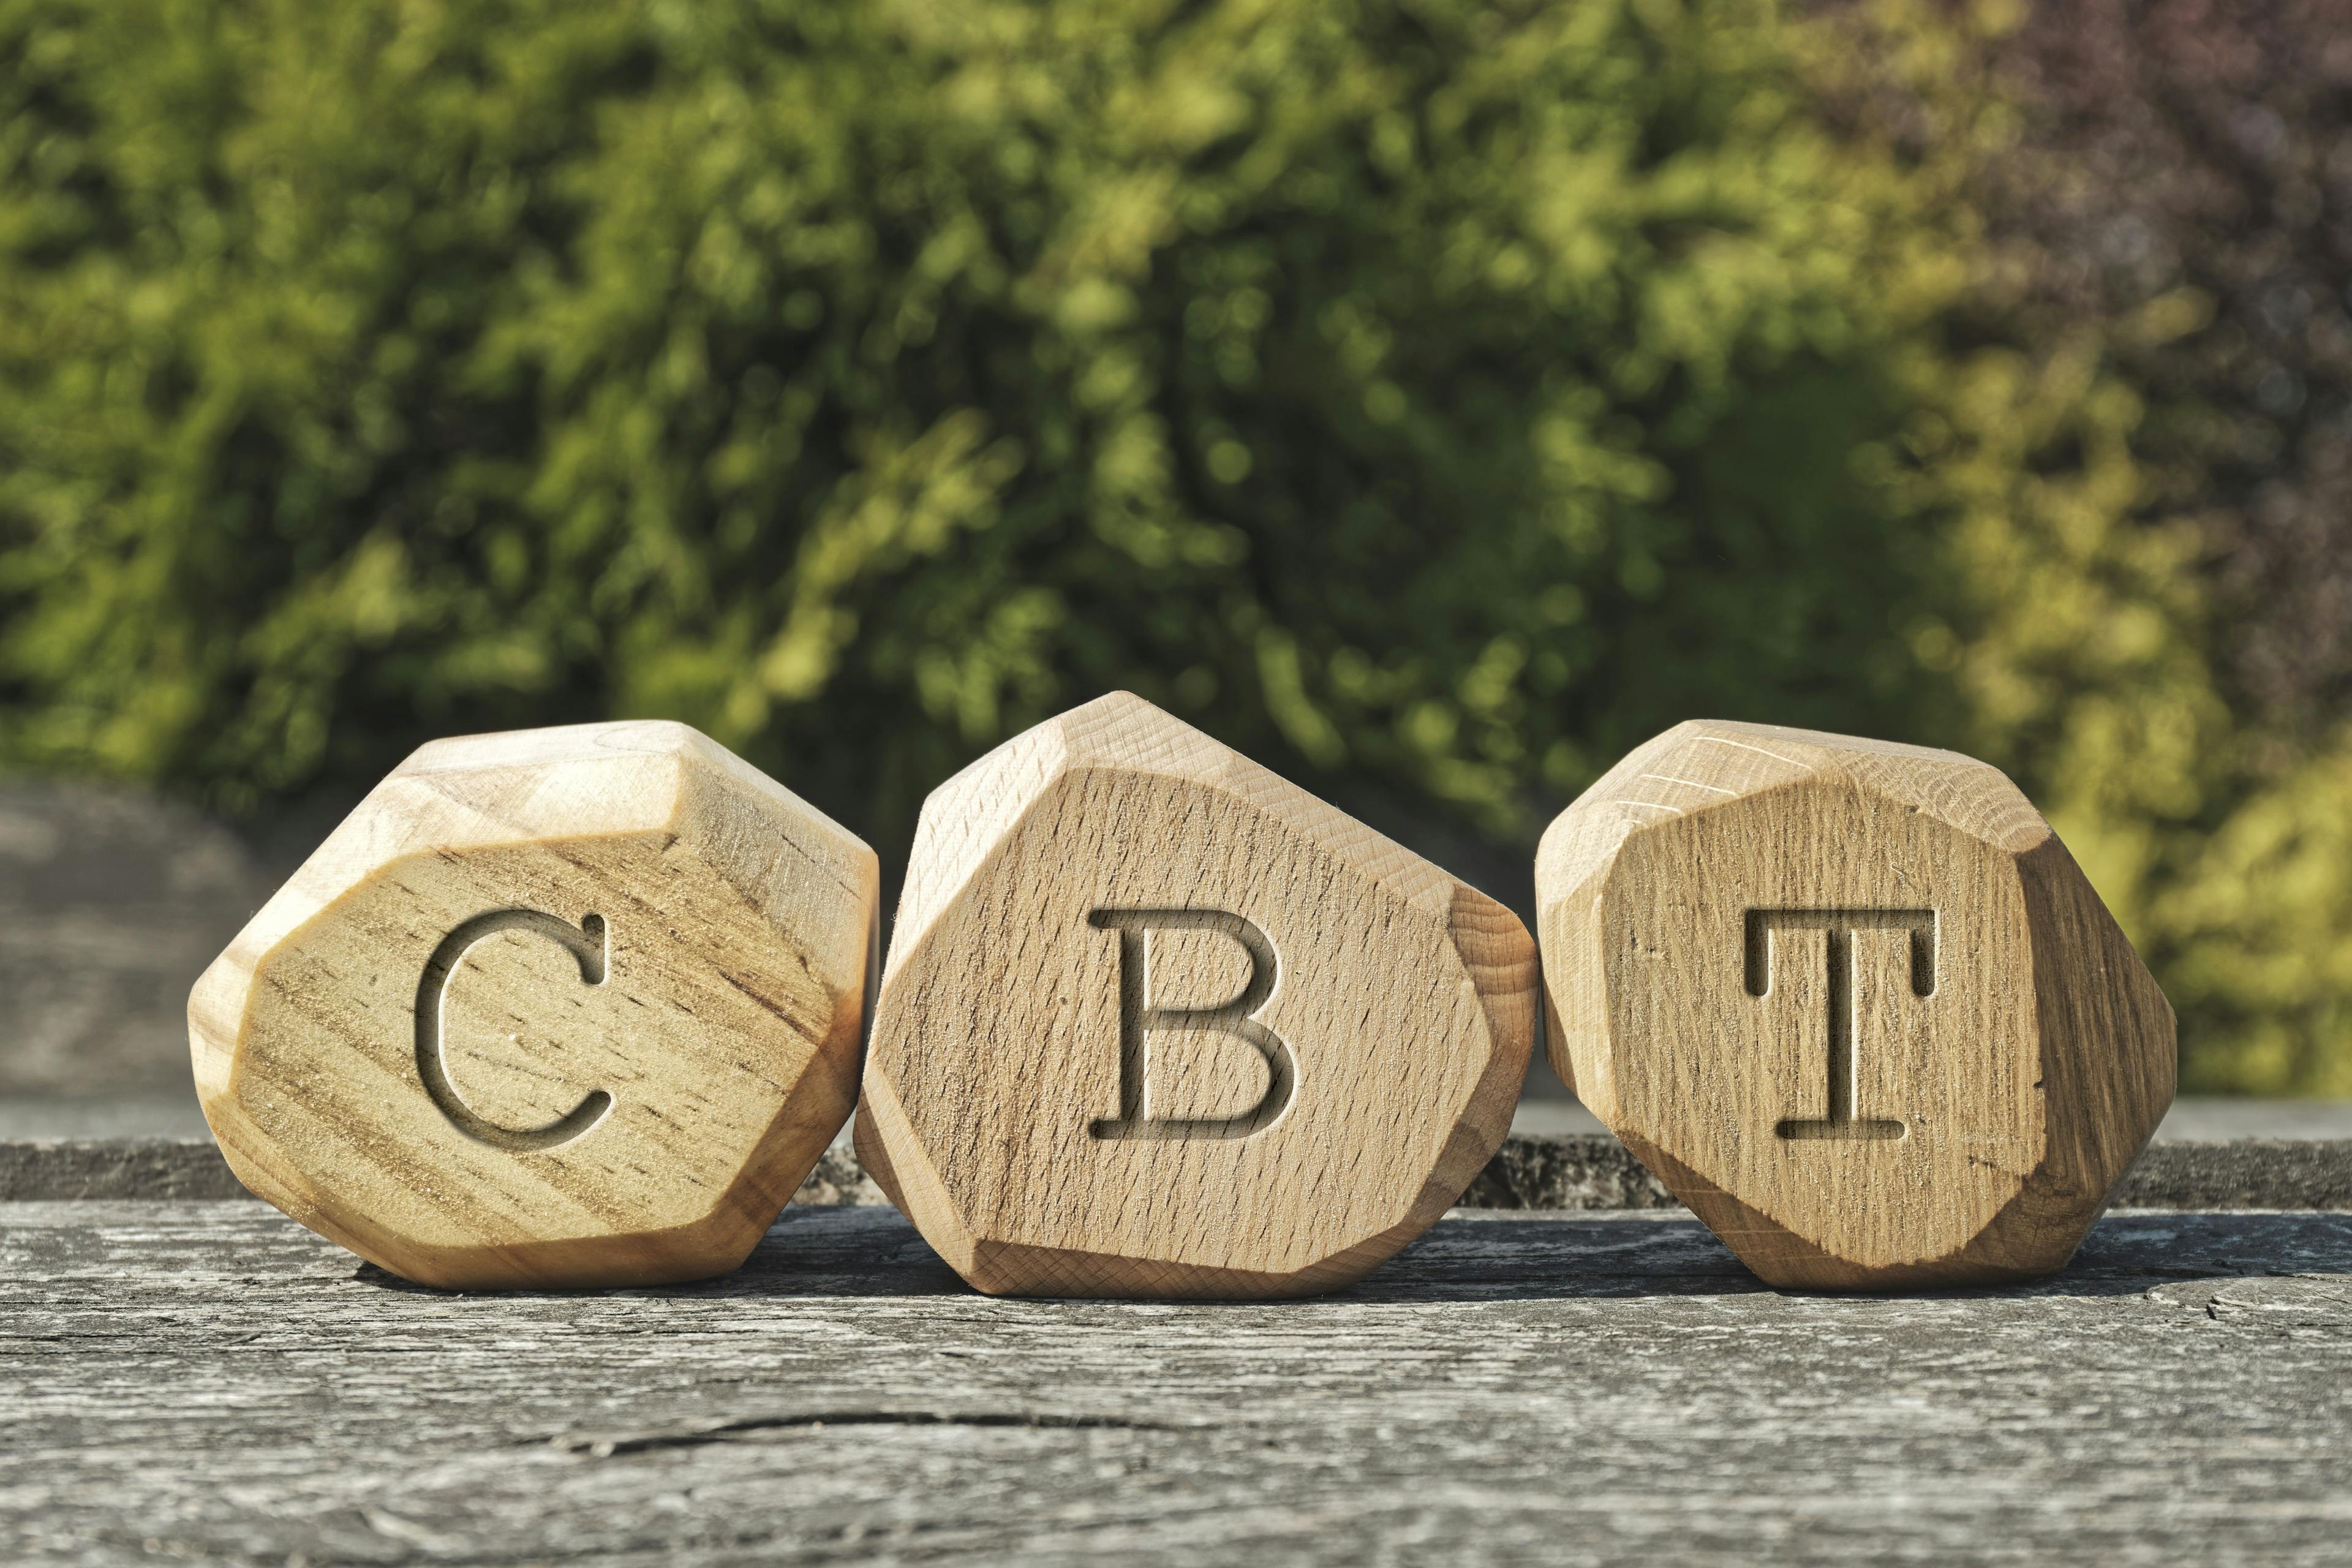 CBT Carved Into Wooden Blocks | image credit: Fotema - stock.adobe.com